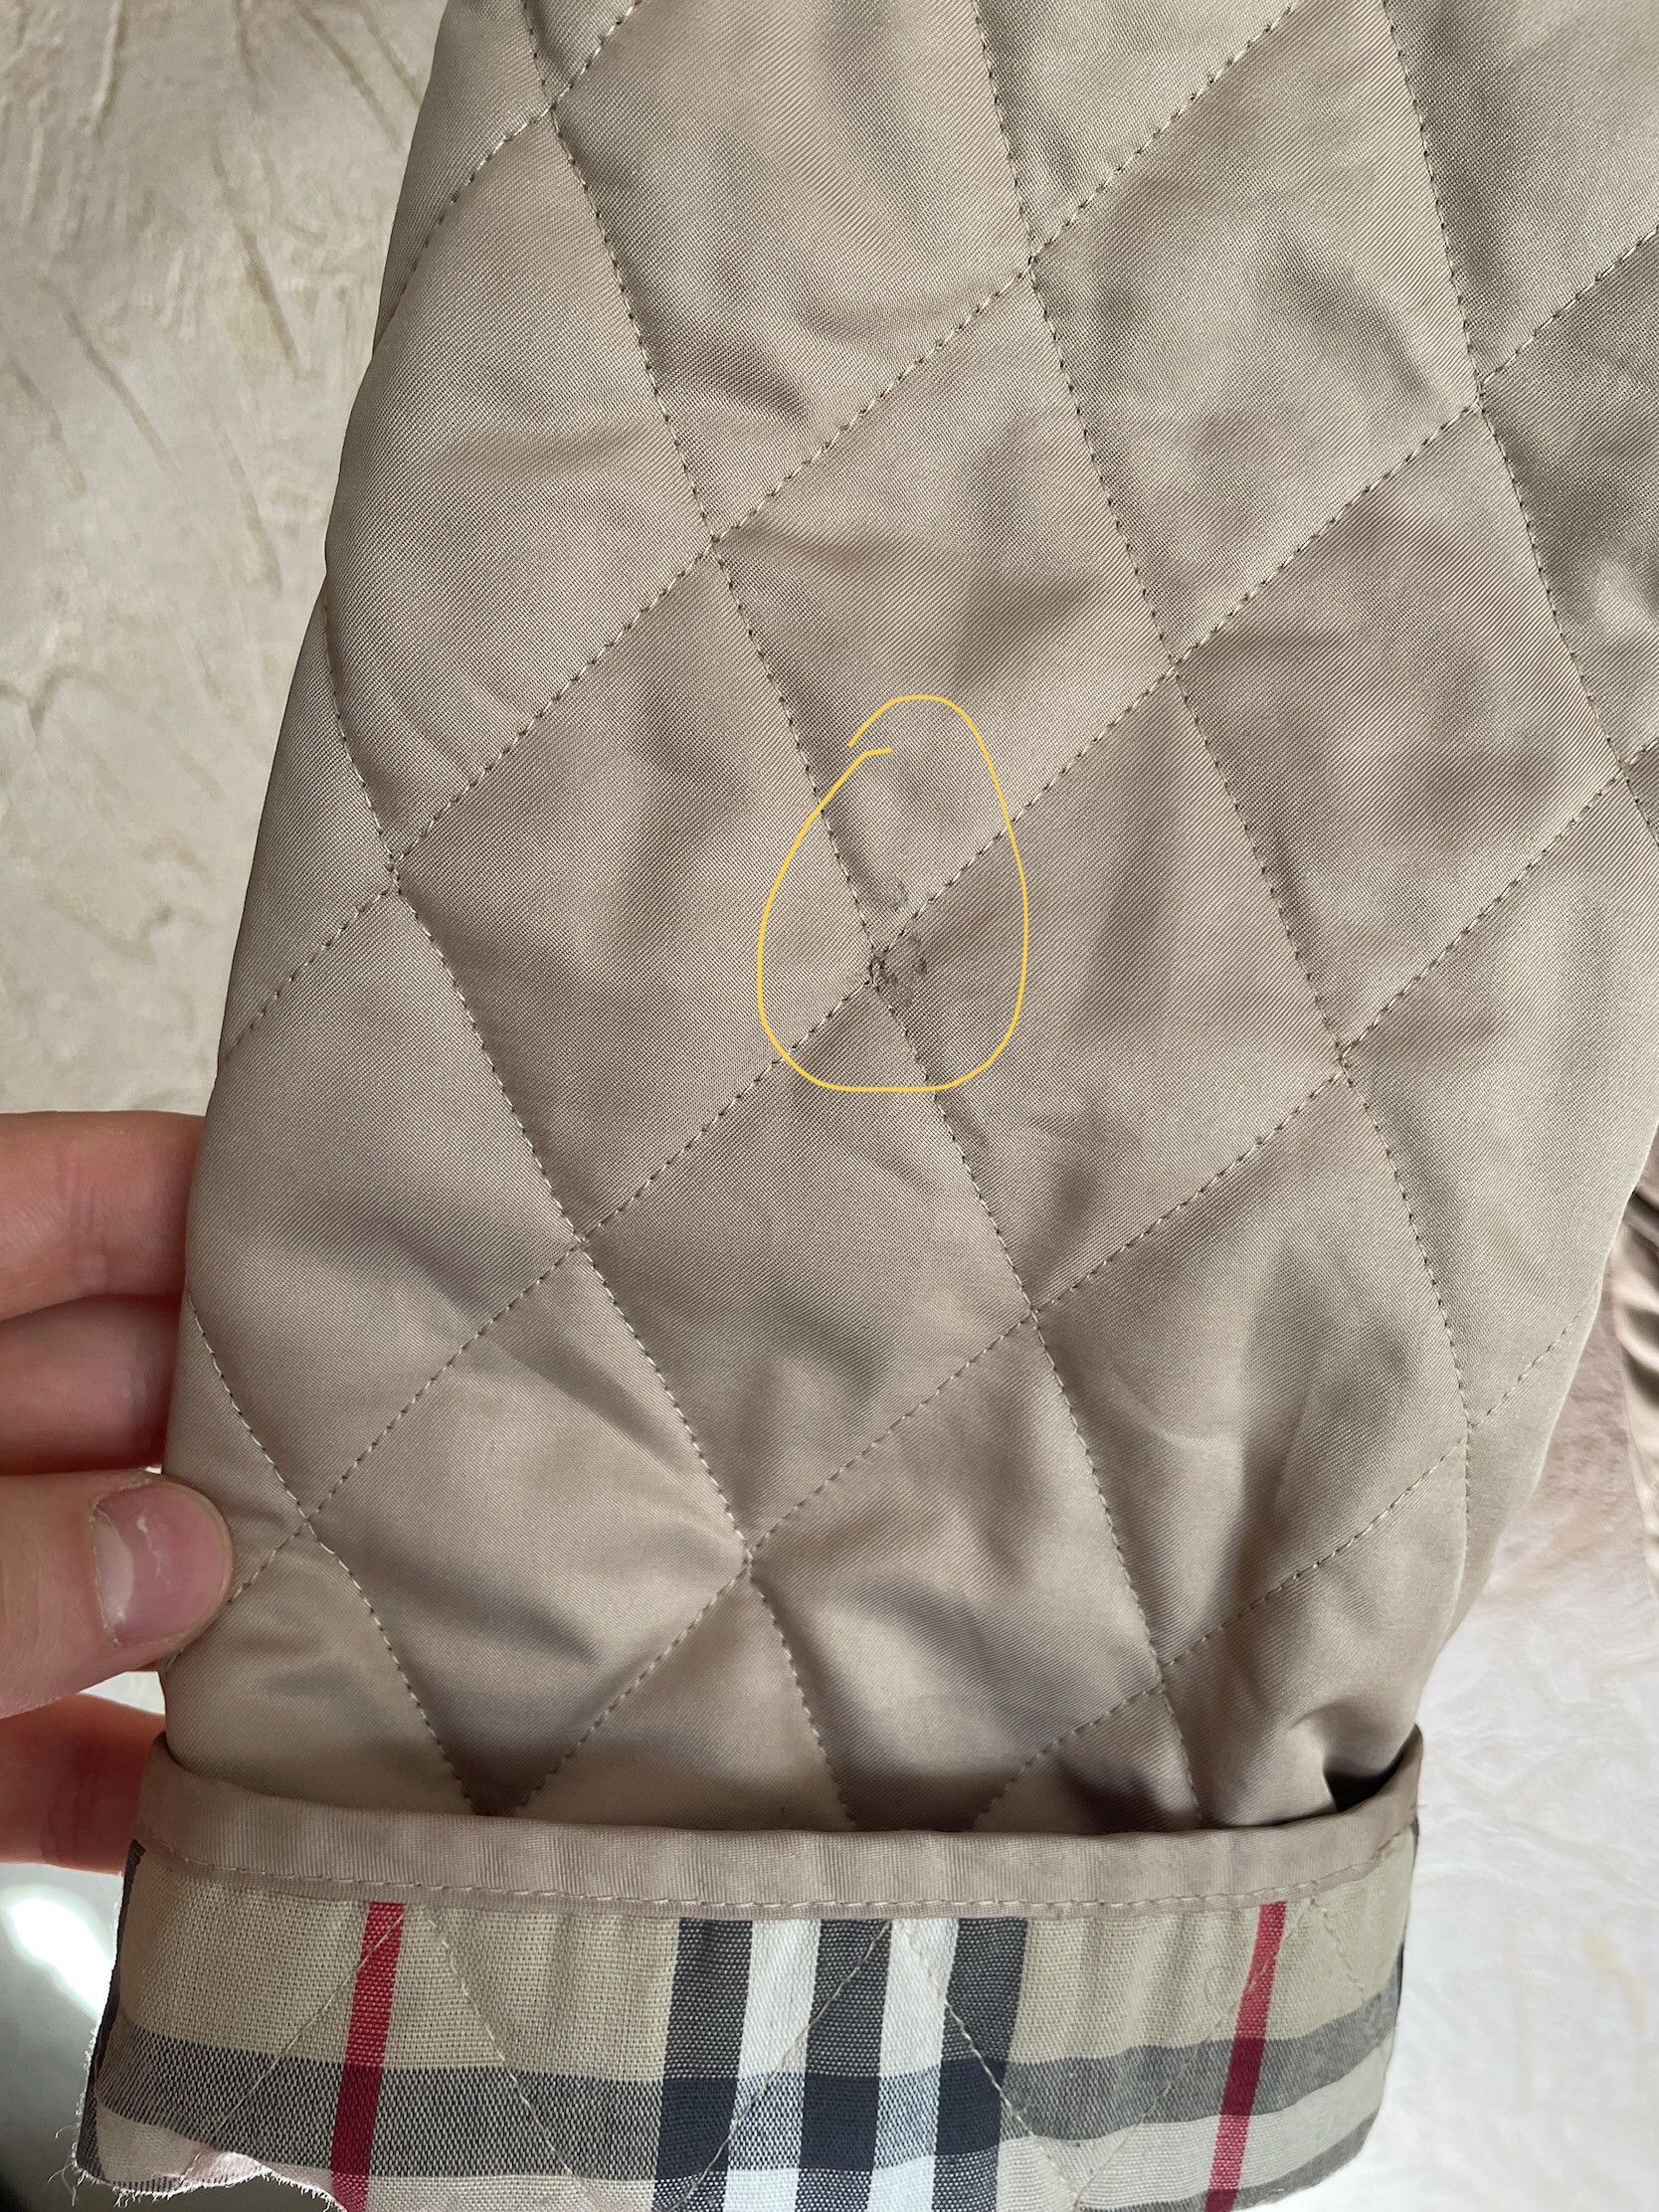 Burberry Burberry Beige Diamond Quilted Jacket Button Nova Check Size M / US 6-8 / IT 42-44 - 12 Thumbnail